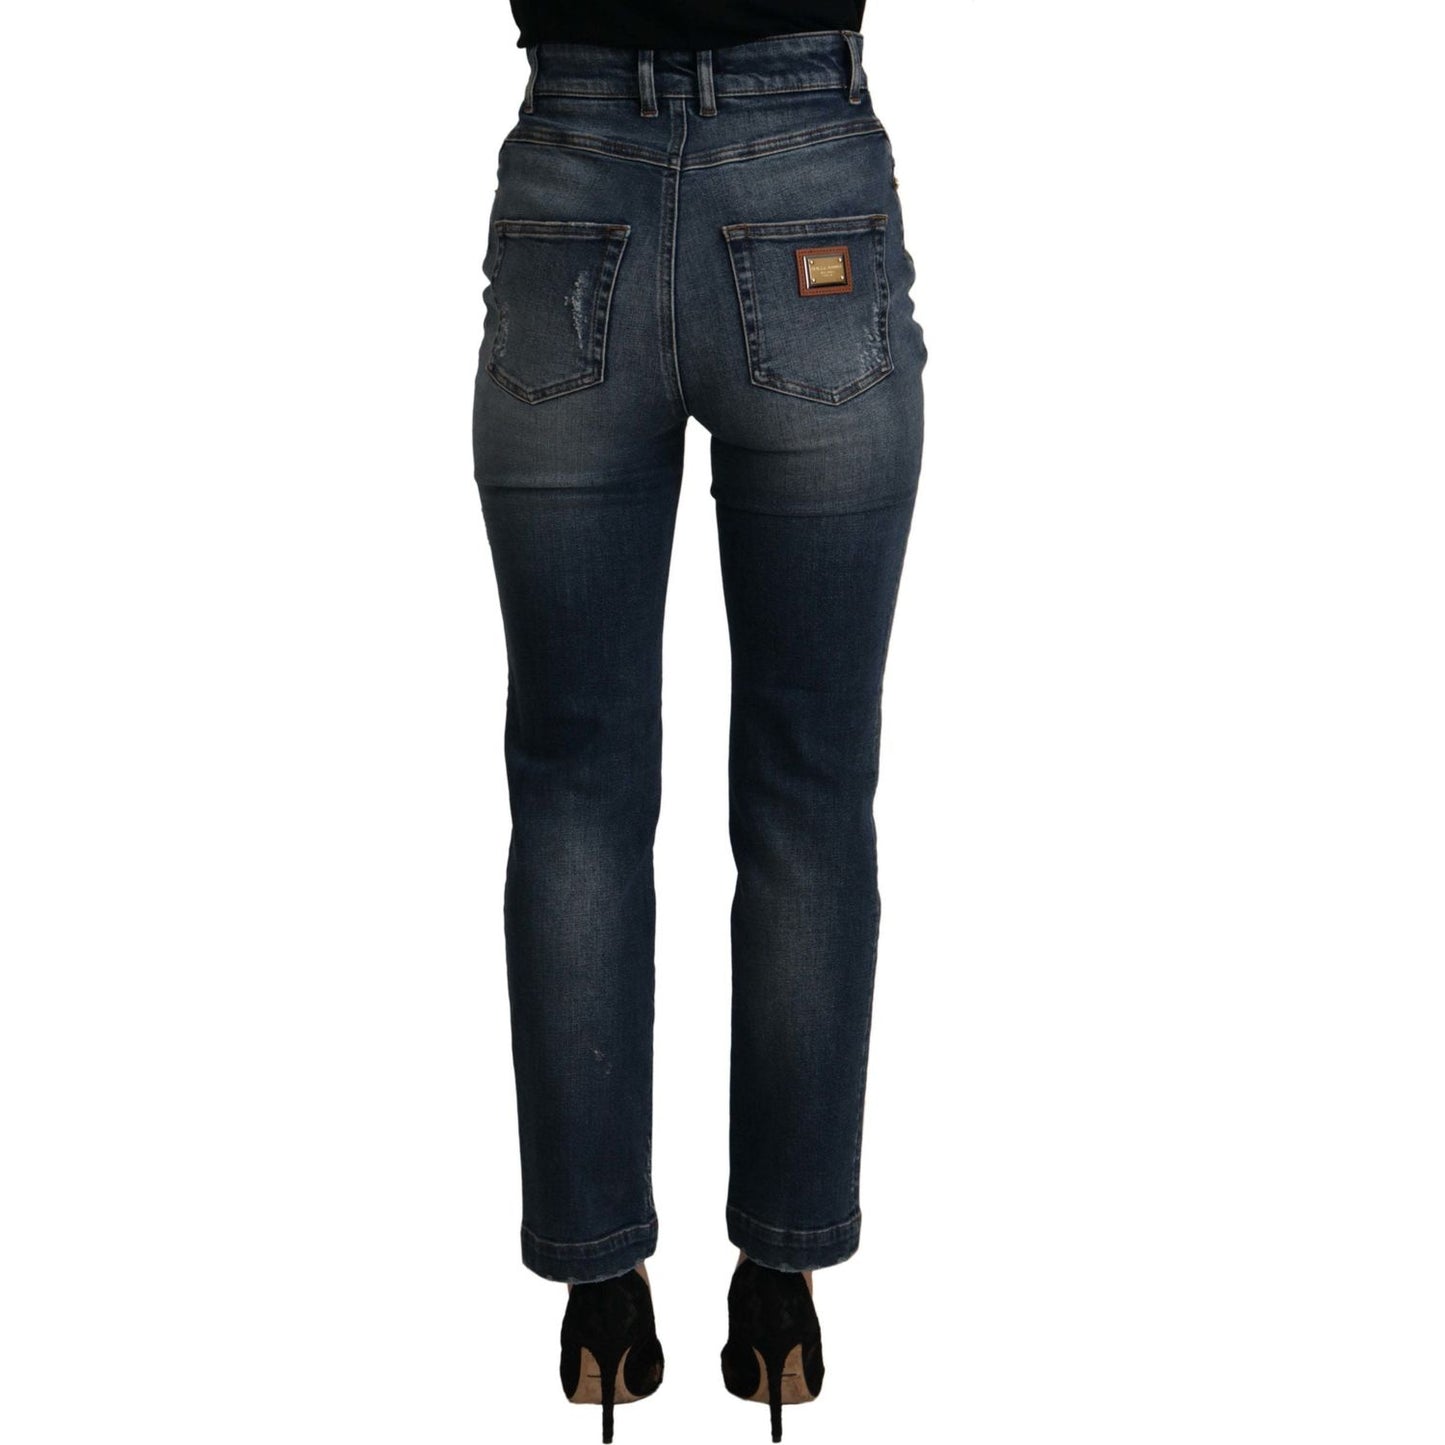 Dolce & GabbanaHigh Waist Skinny Designer Jeans in BlueMcRichard Designer Brands£619.00